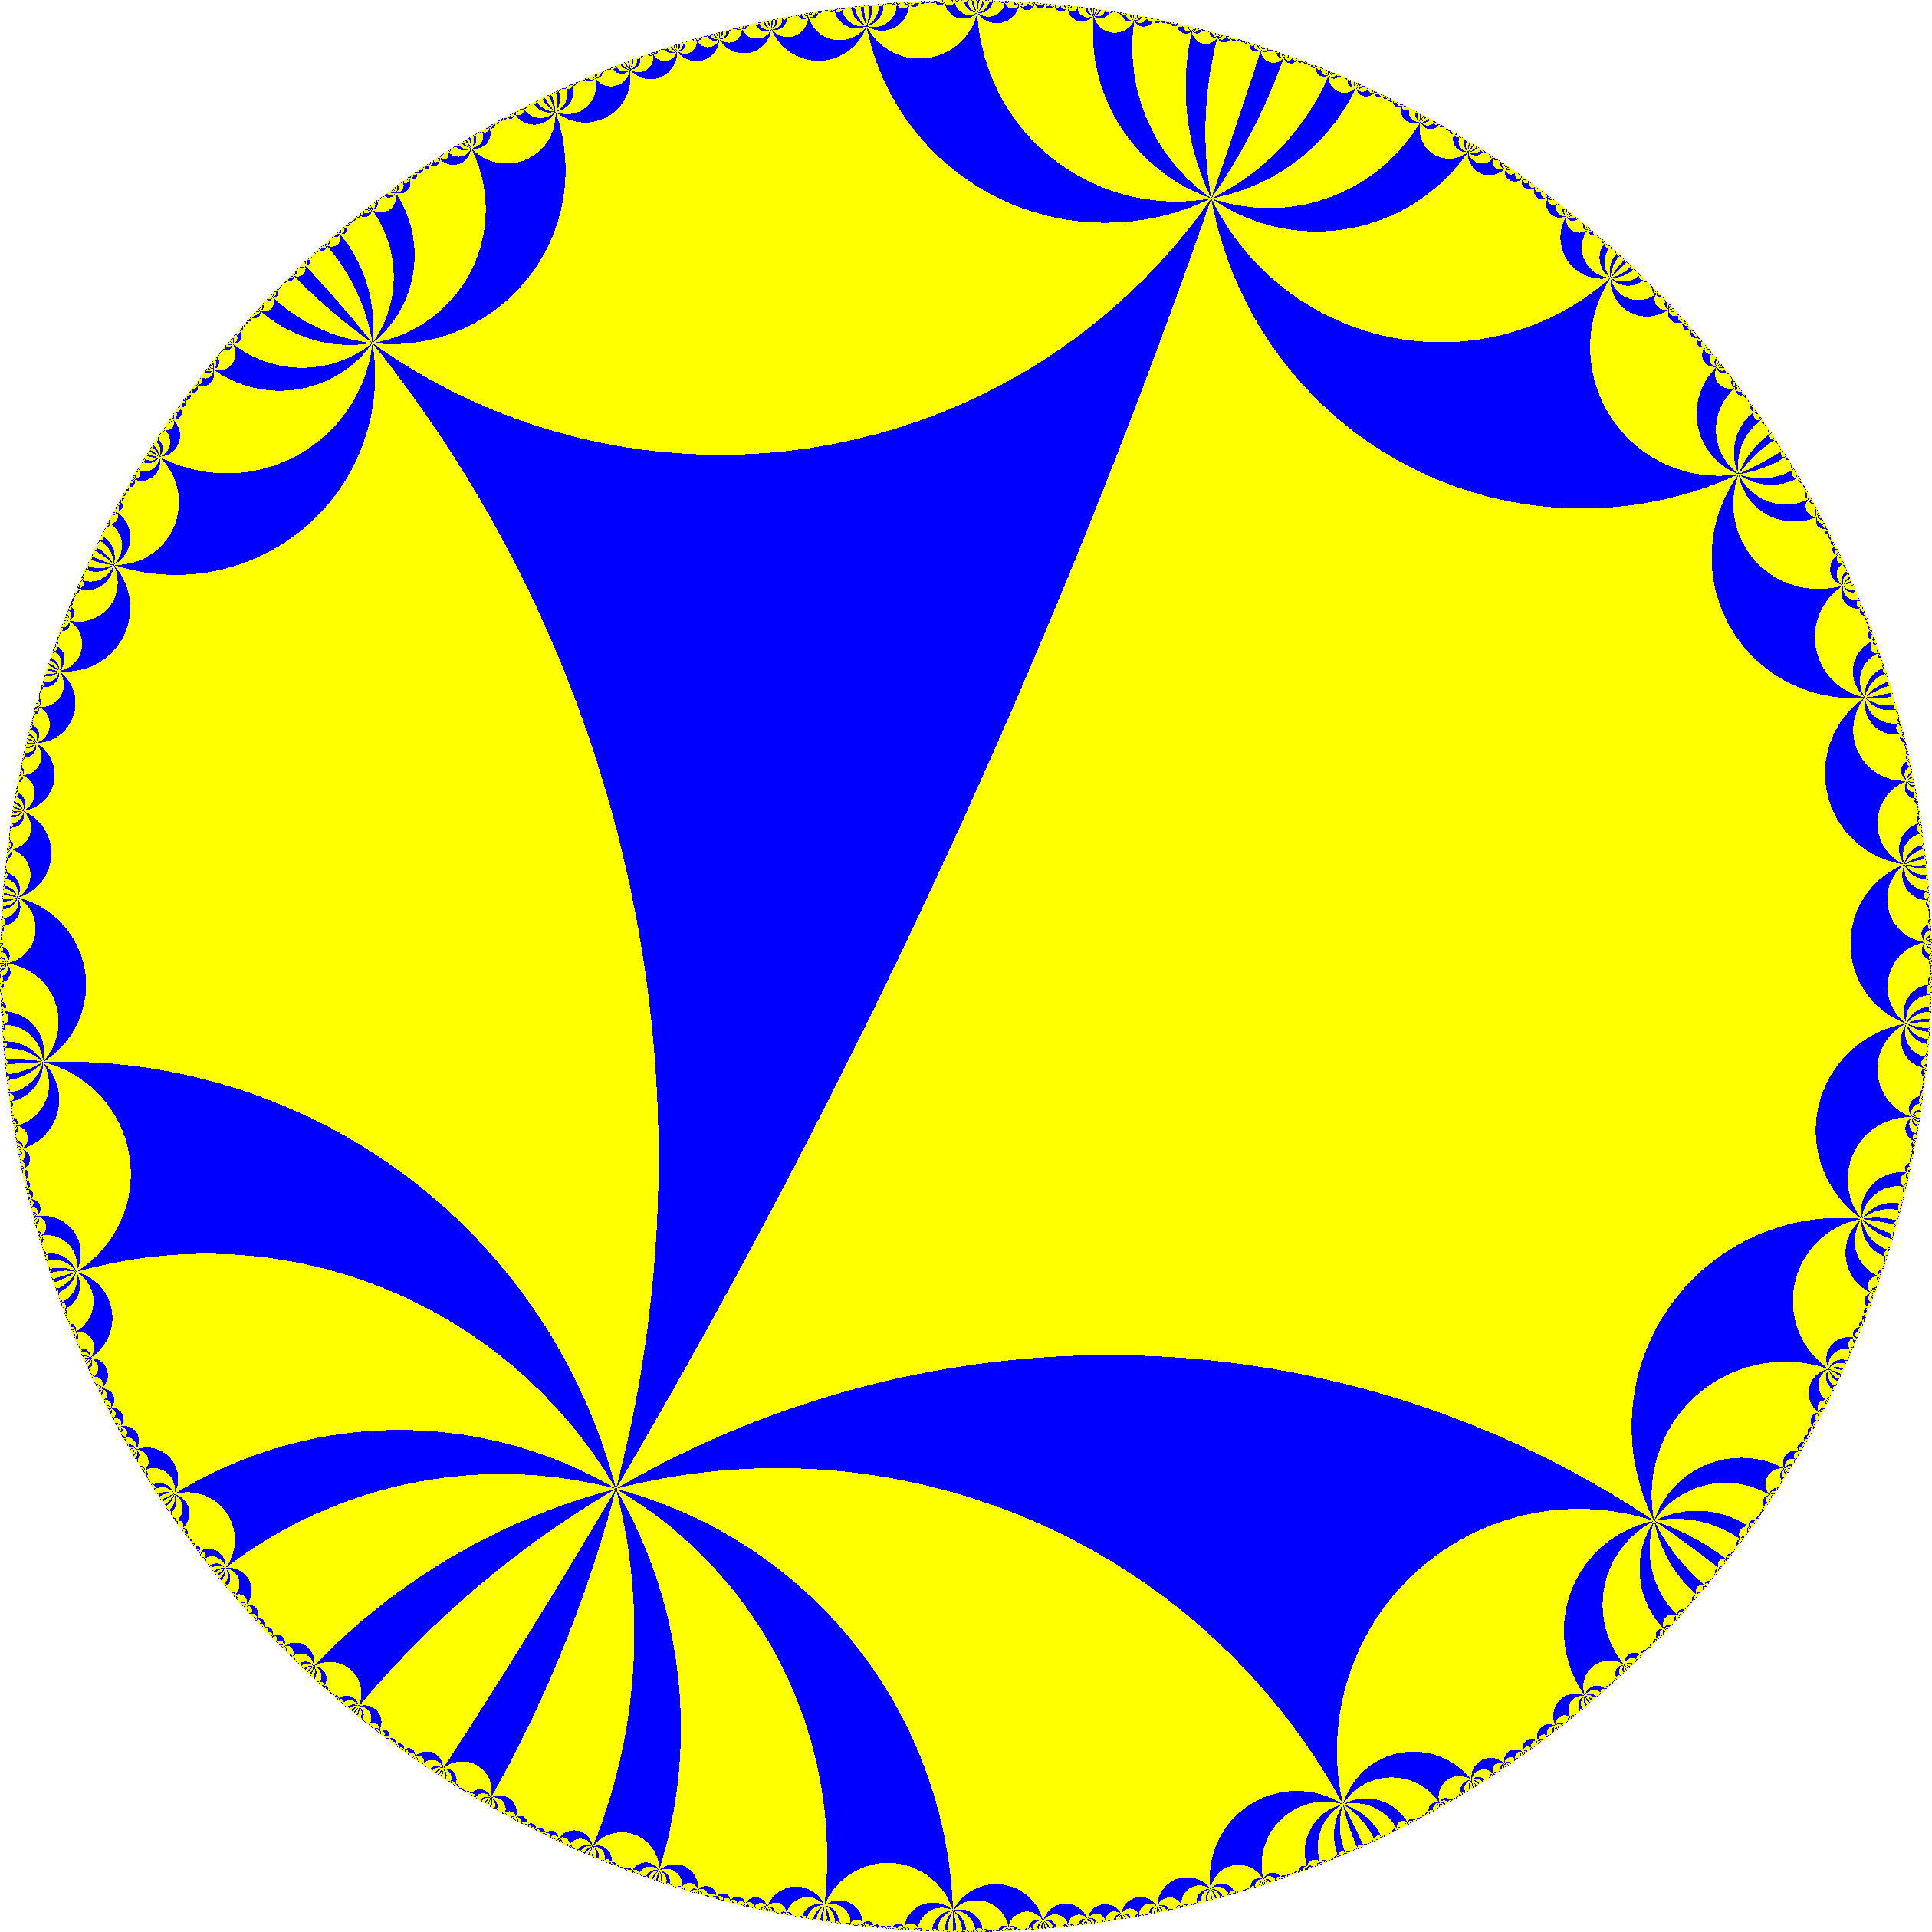 Symmetry Circle Leaf Clip Art - Symmetry Circle Leaf Clip Art (2520x2520)